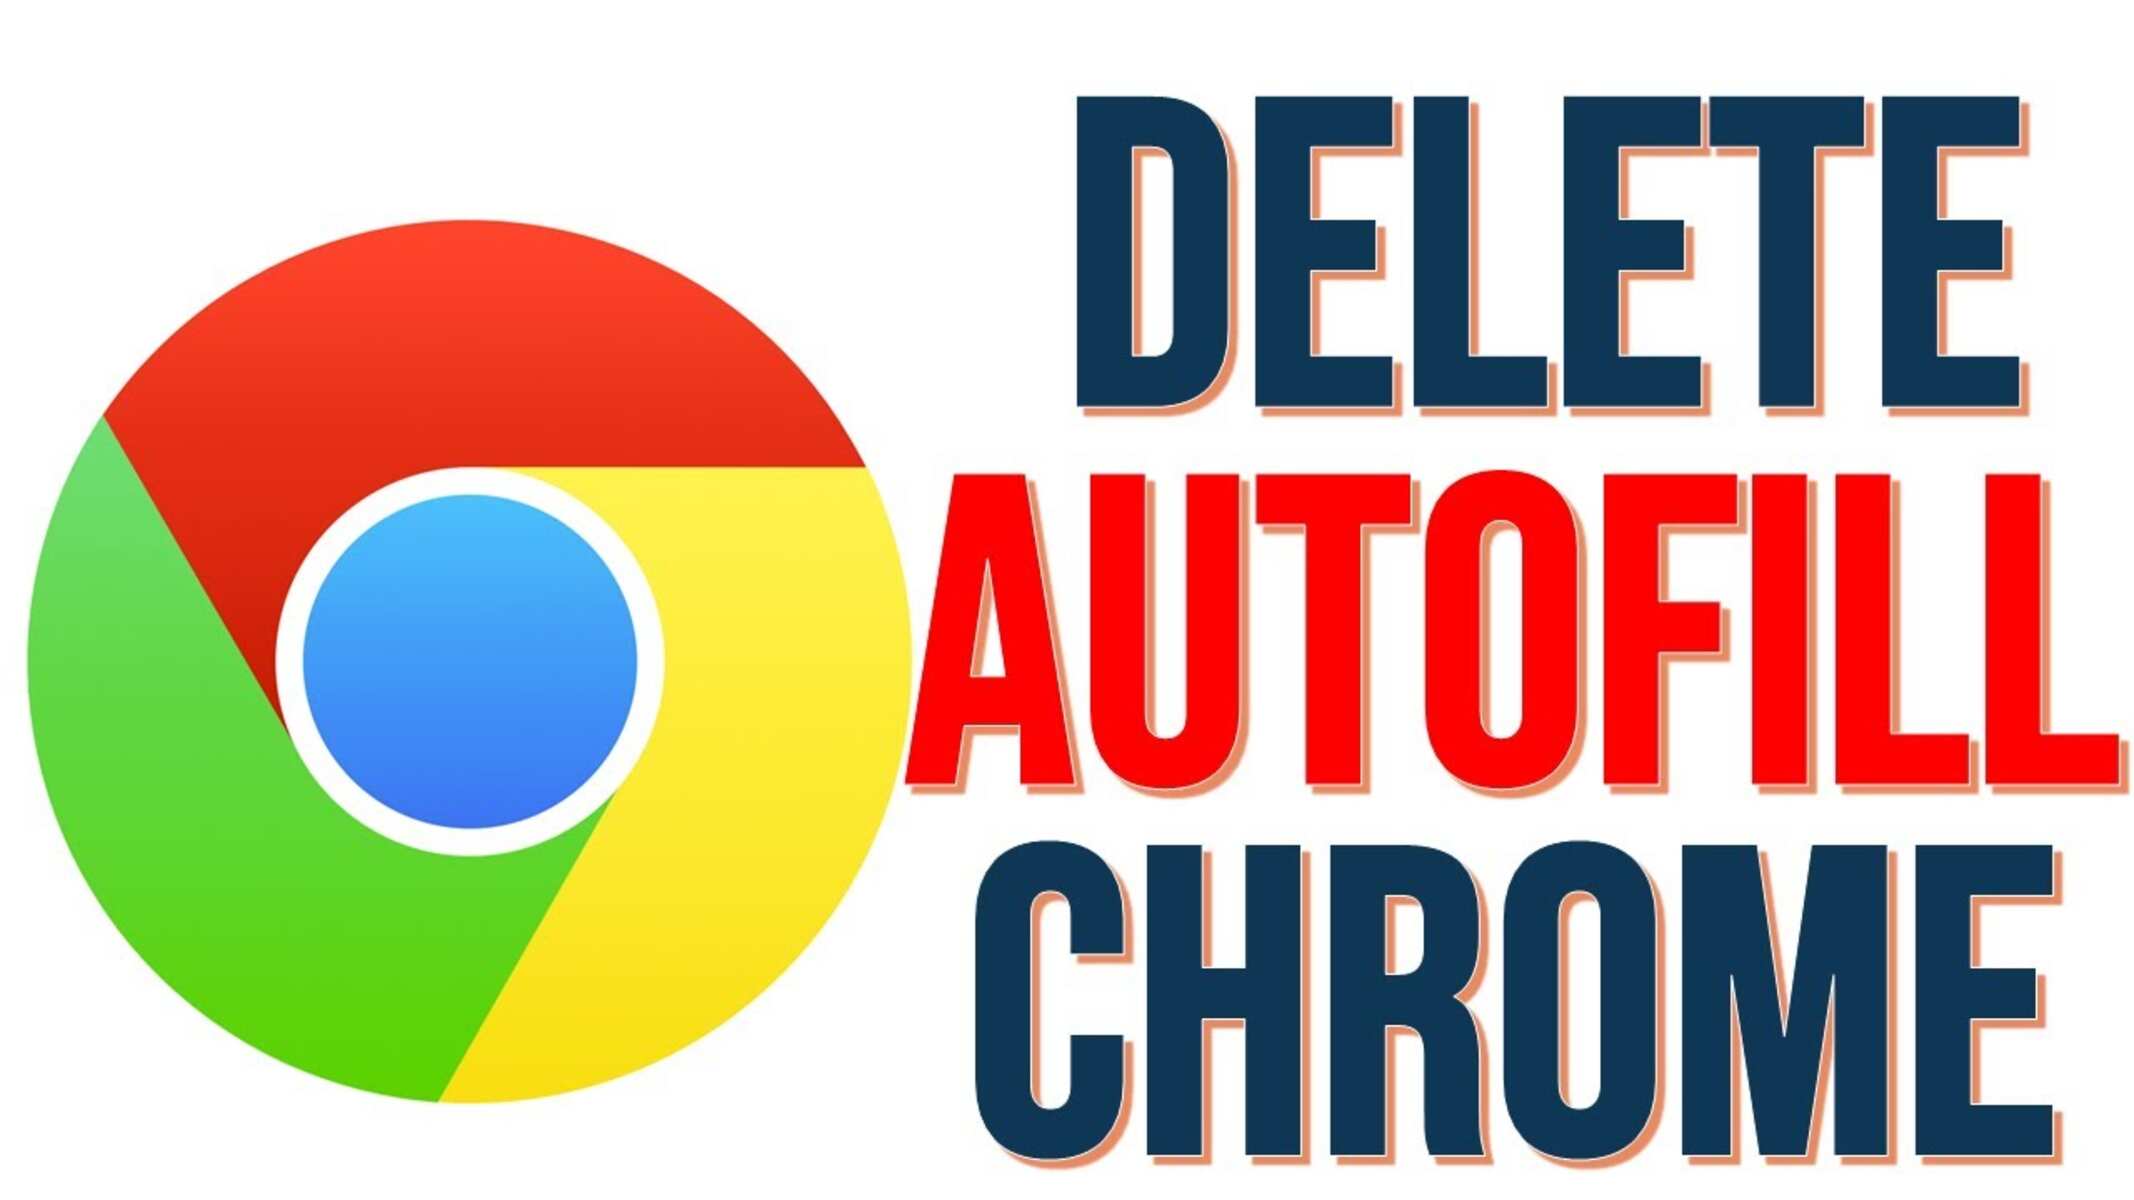 How To Delete Autofill In Chrome